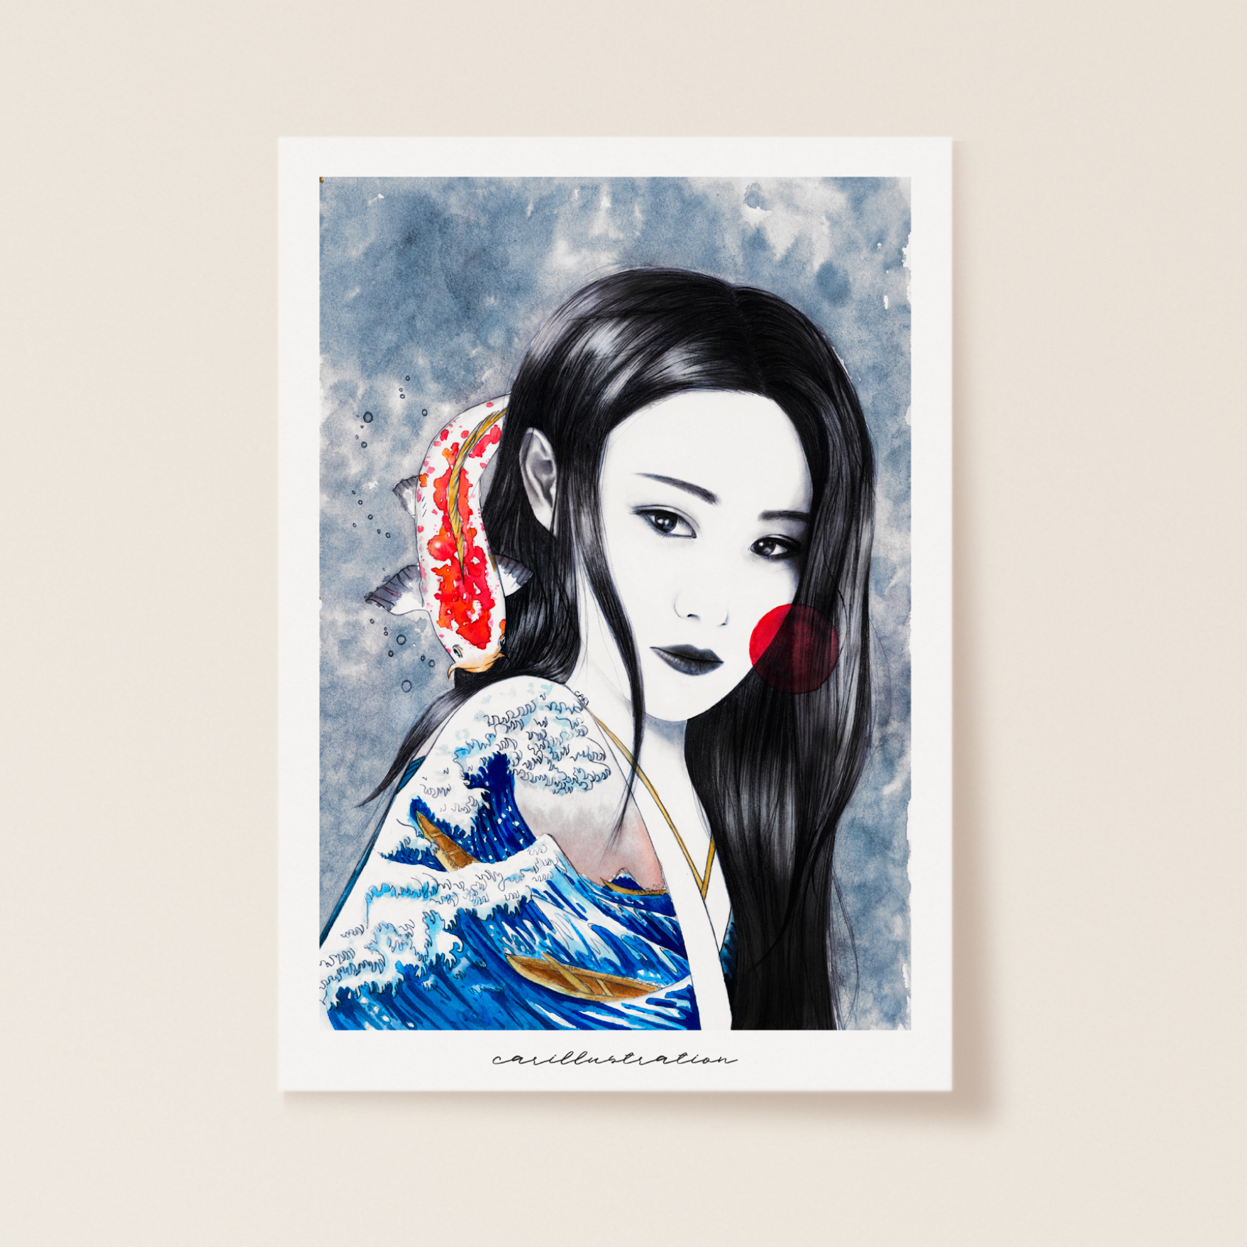 lámina ilustracion a mano carillustration acuarela y tinta chica peliblanca japón ola de kanagawa hokusai carpa nipon asia